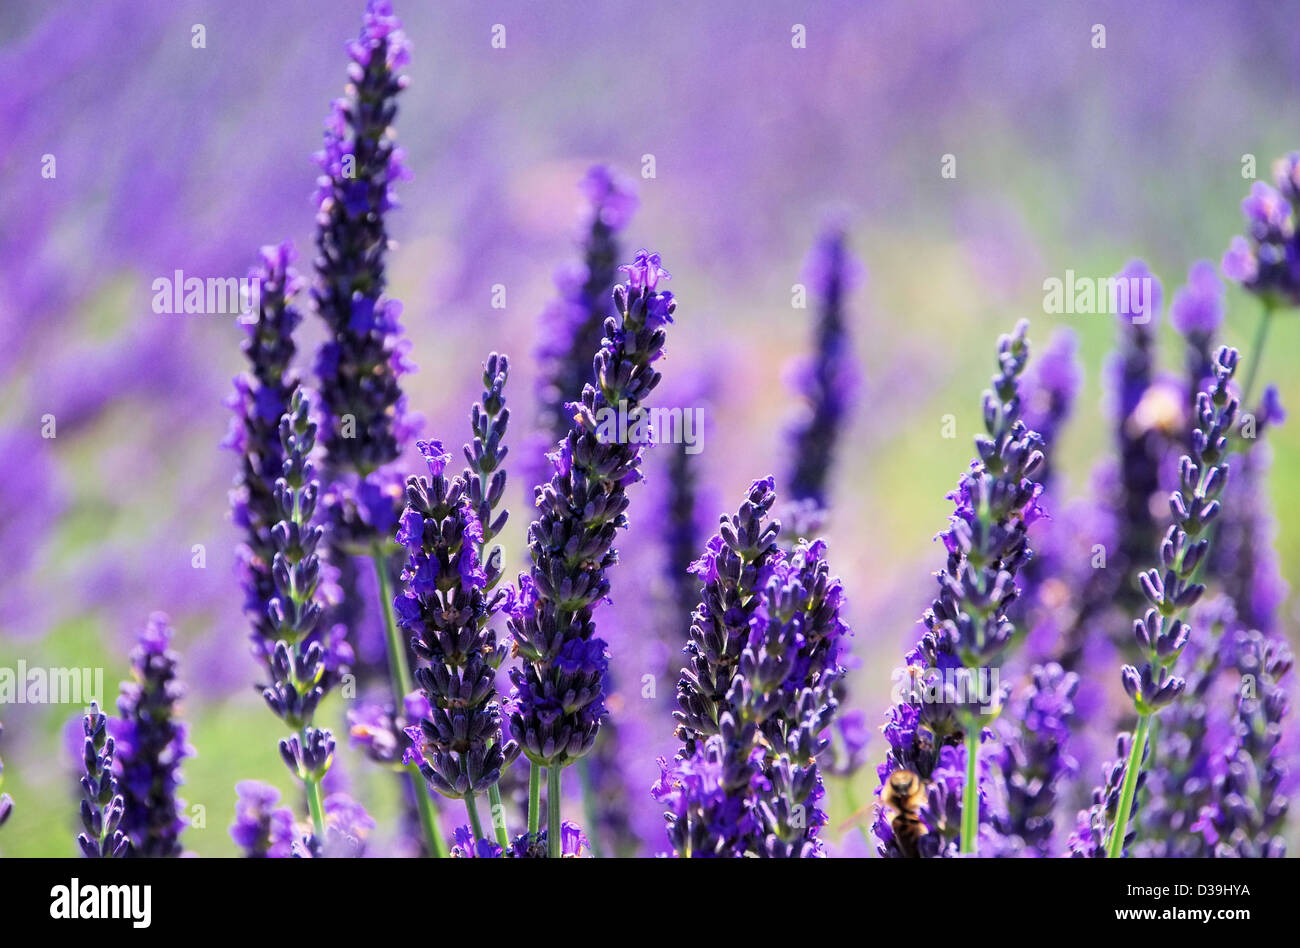 Lavendelfeld - lavender field 51 Stock Photo